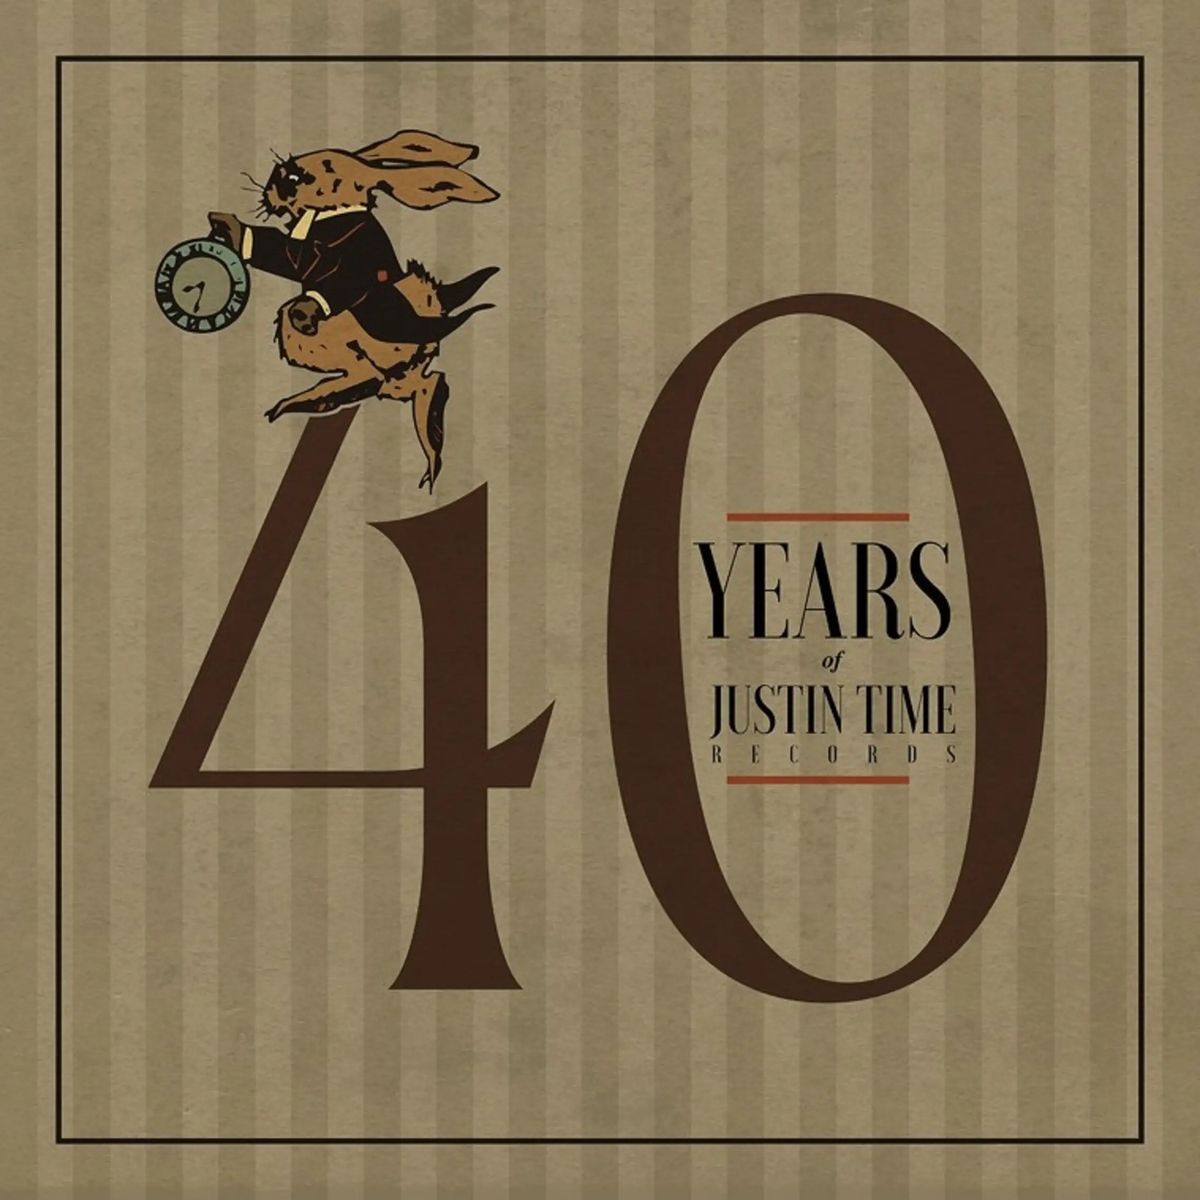 Justin Time Records Celebrates 40th Anniversary